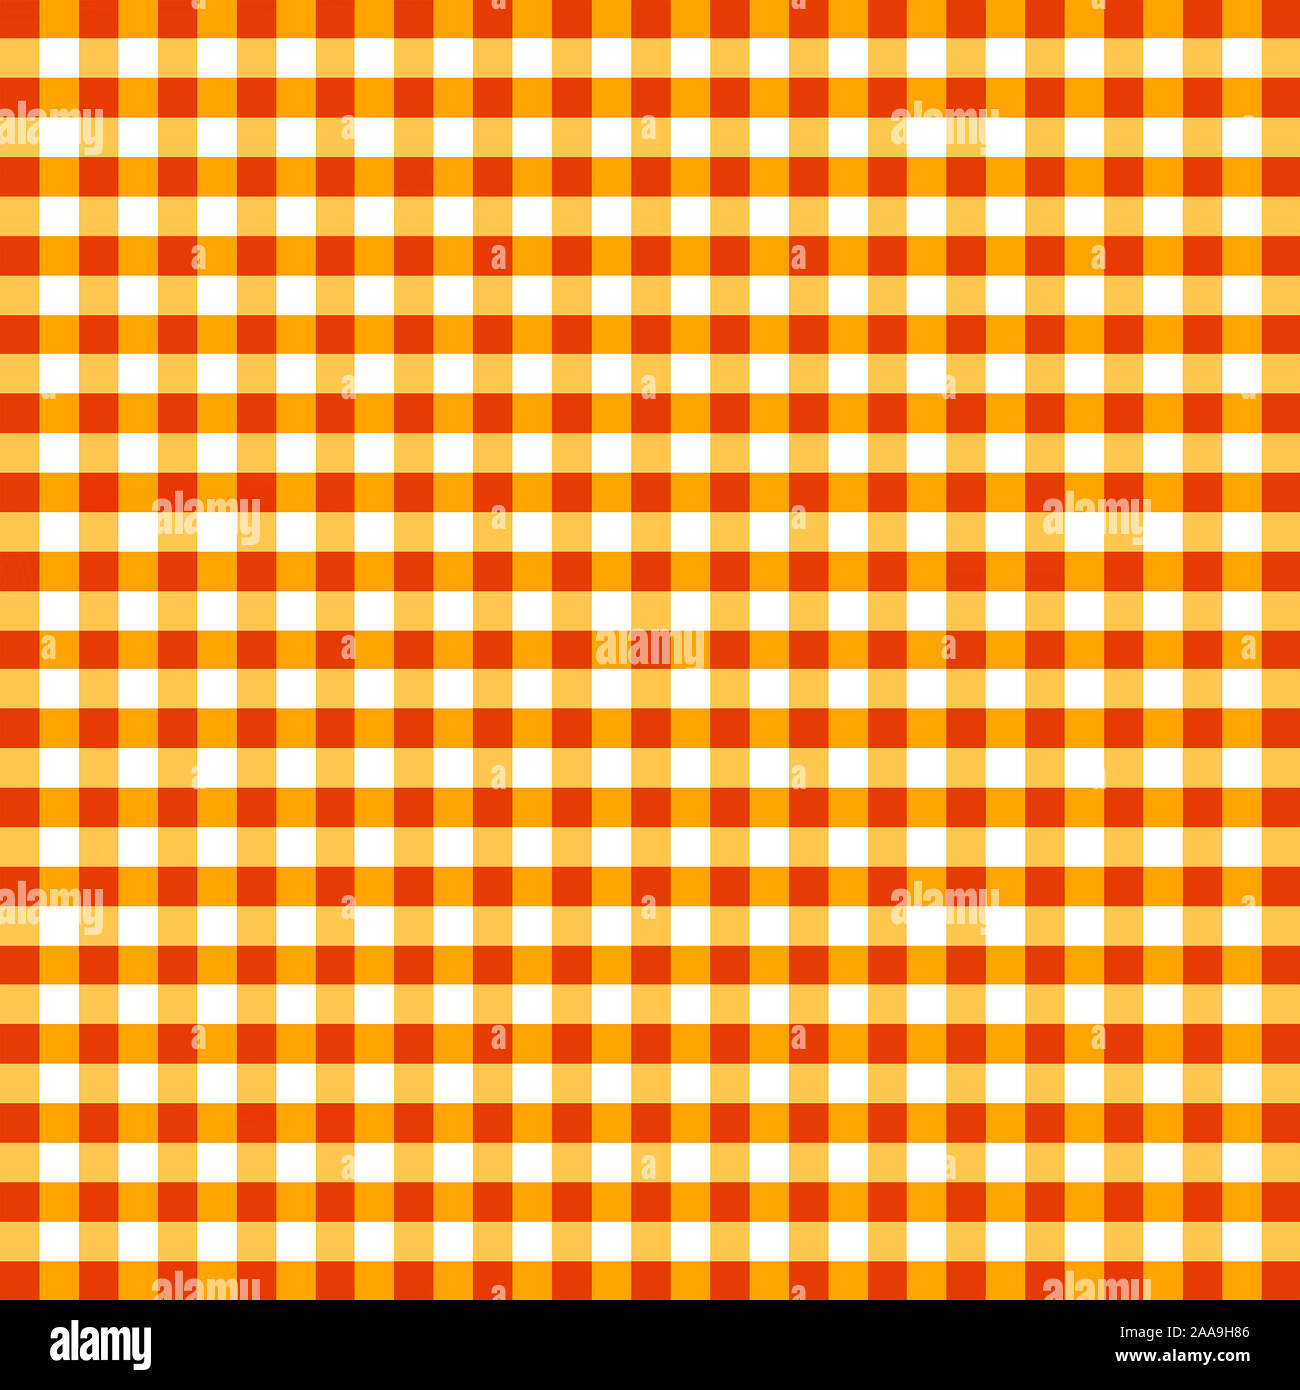 https://c8.alamy.com/comp/2AA9H86/checked-orange-white-pattern-design-2AA9H86.jpg